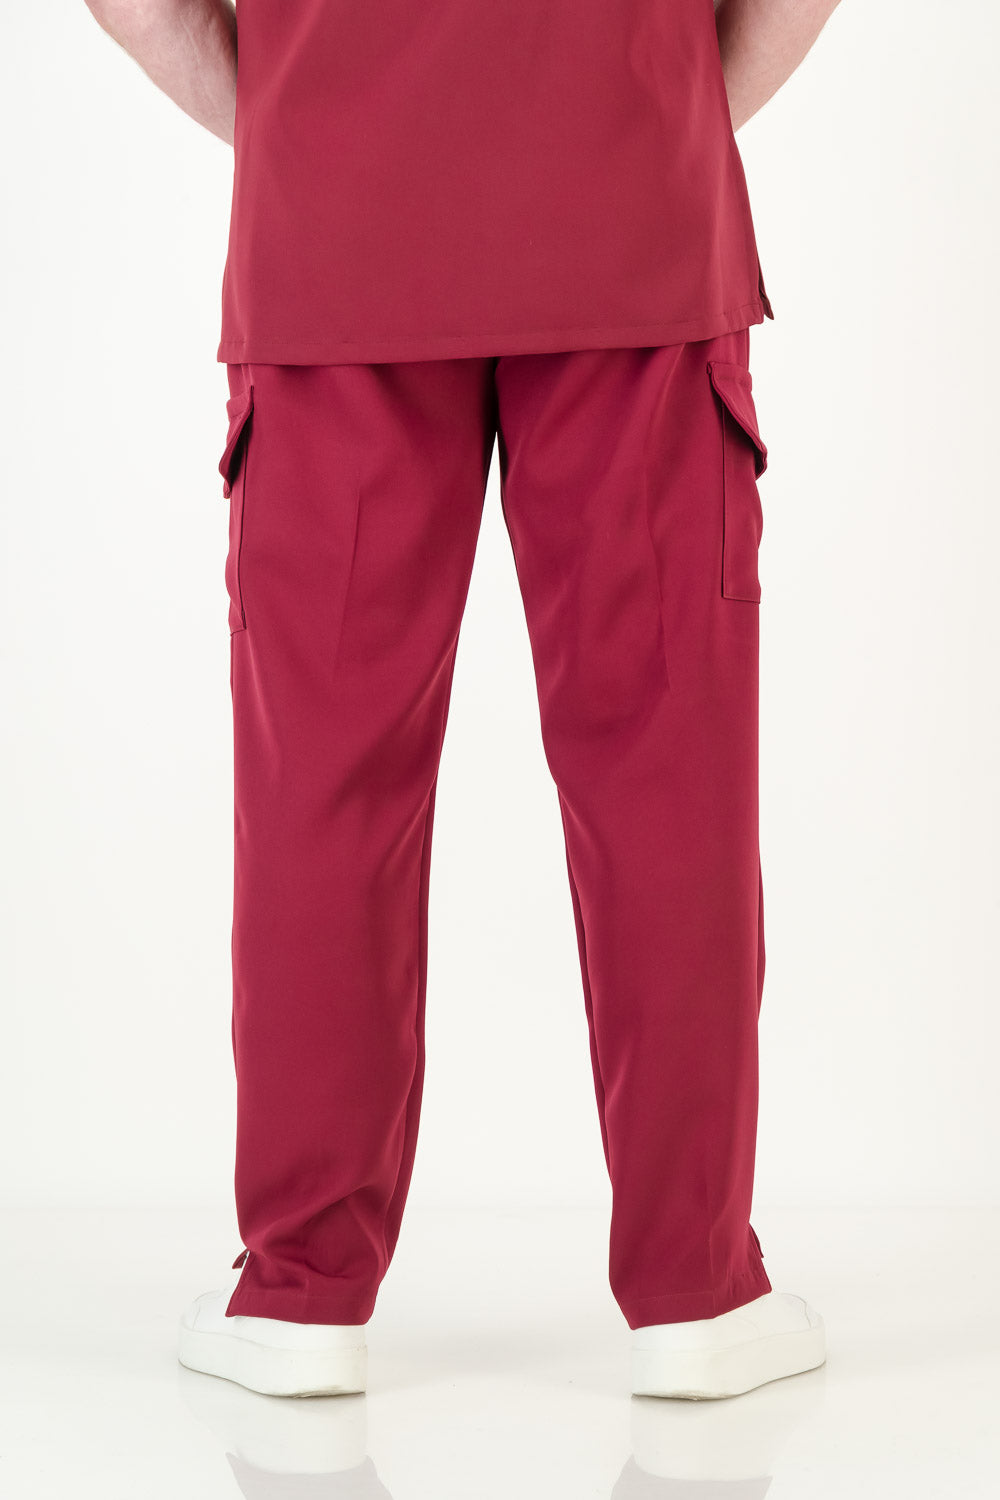 Men's Merlot Red Scrub Pants (NEW FABRIC)